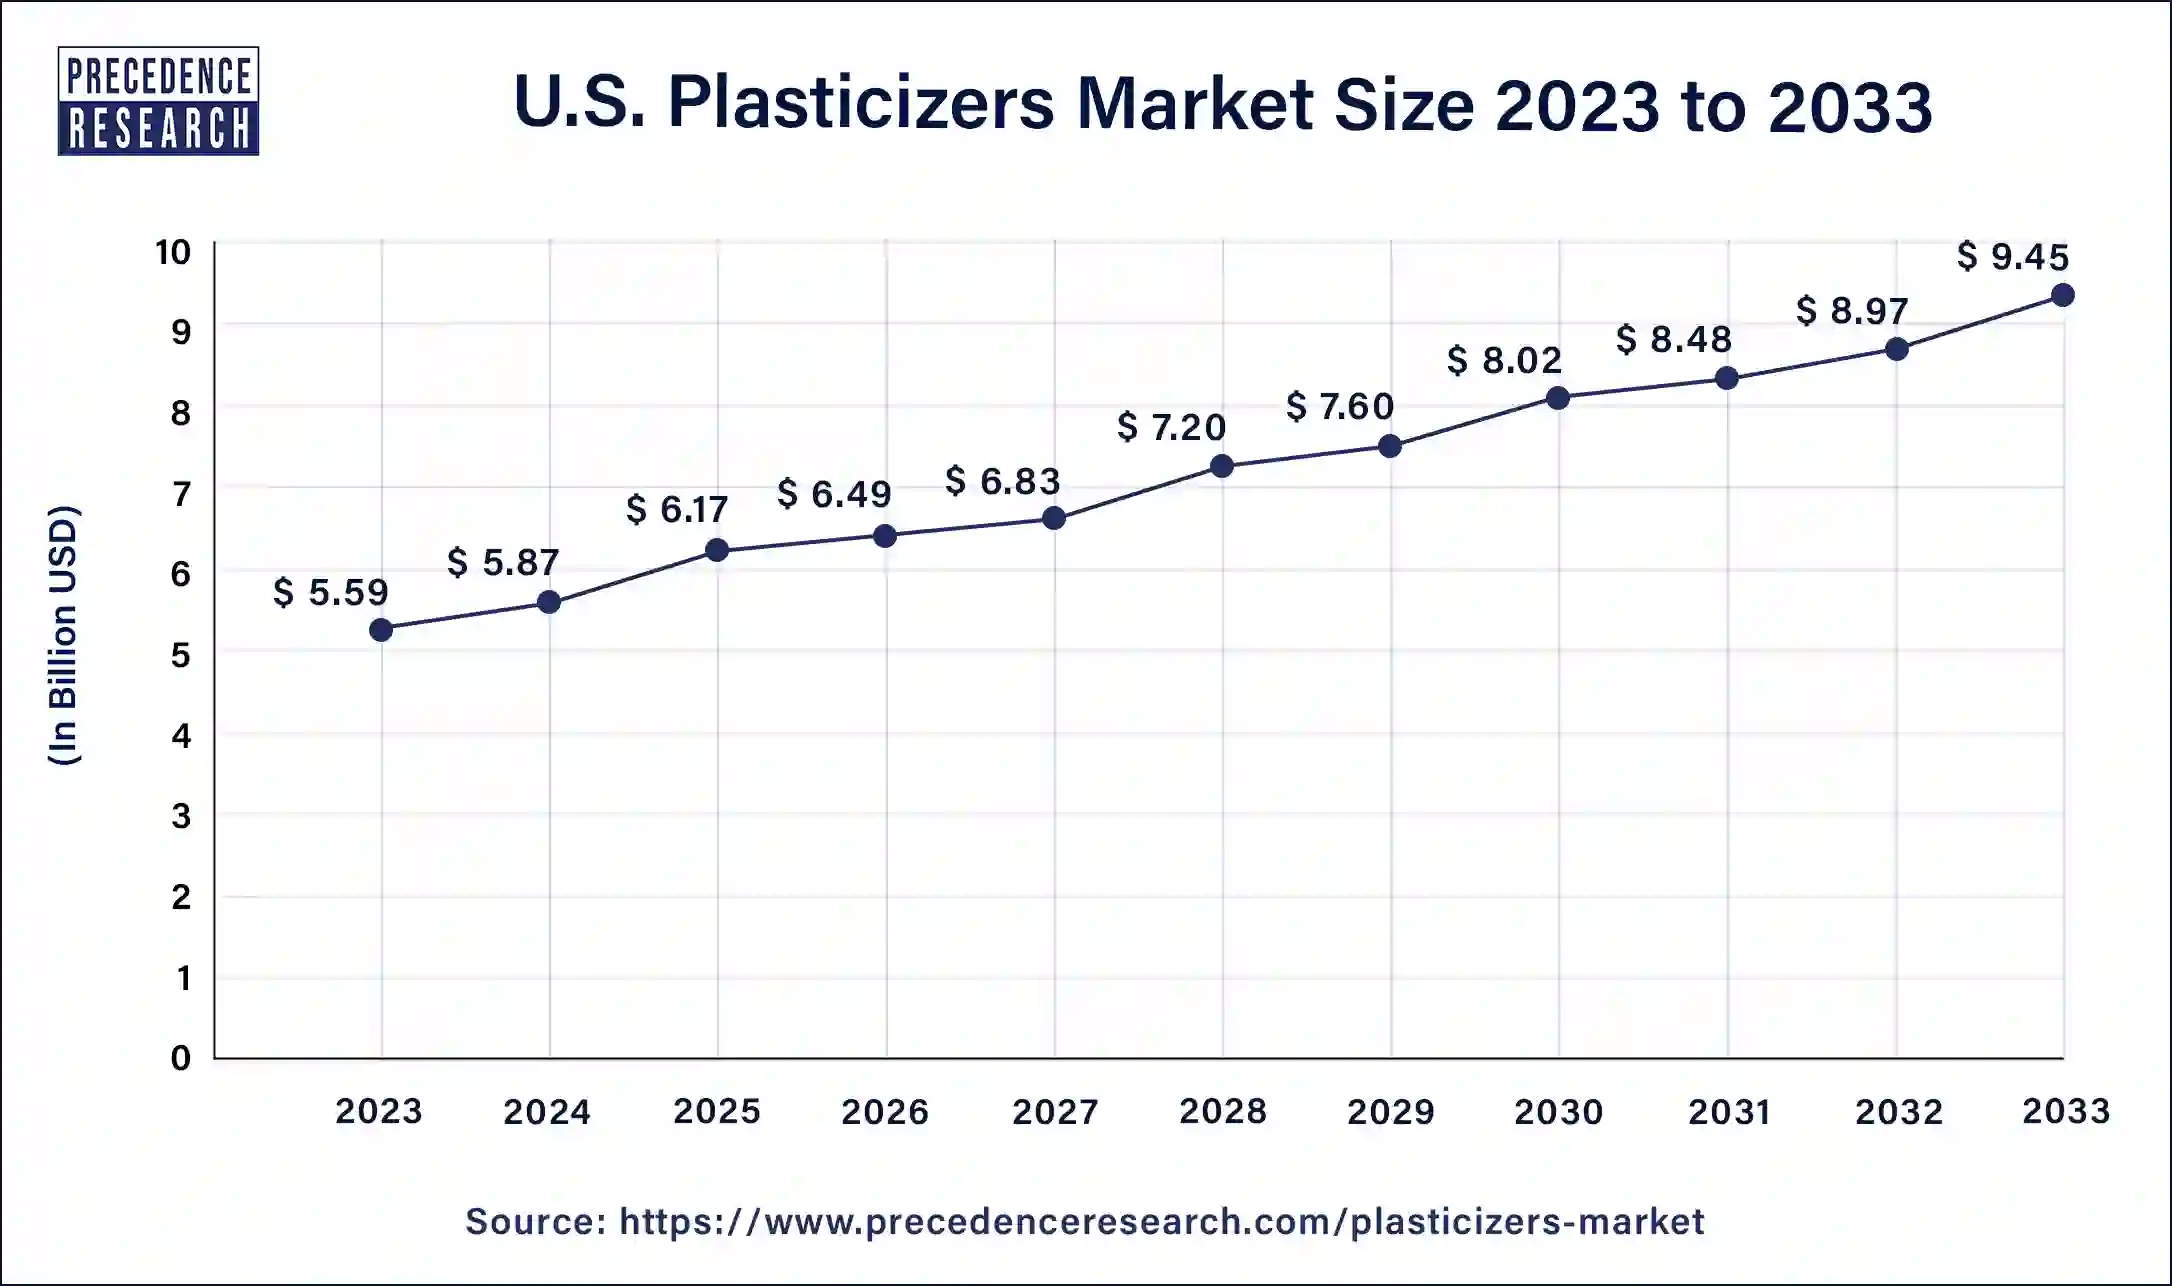 U.S. Plasticizers Market Size 2024 to 2033